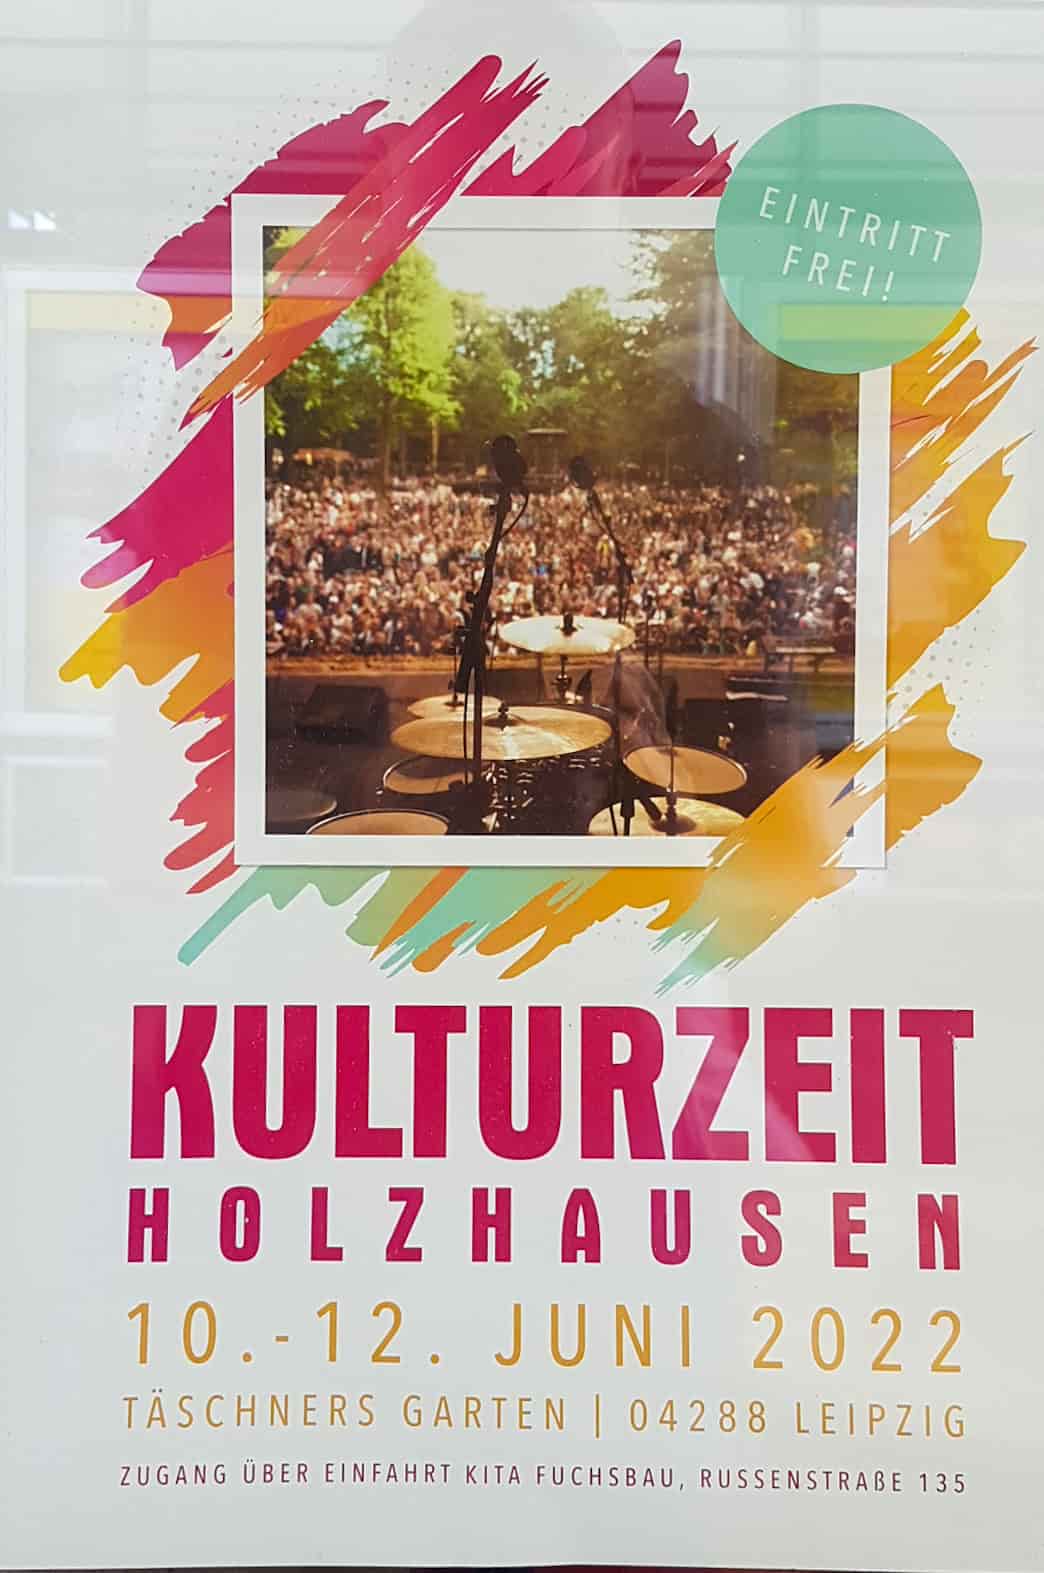 Holzhausen, Leipzig: Kulturzeit Holzhausen